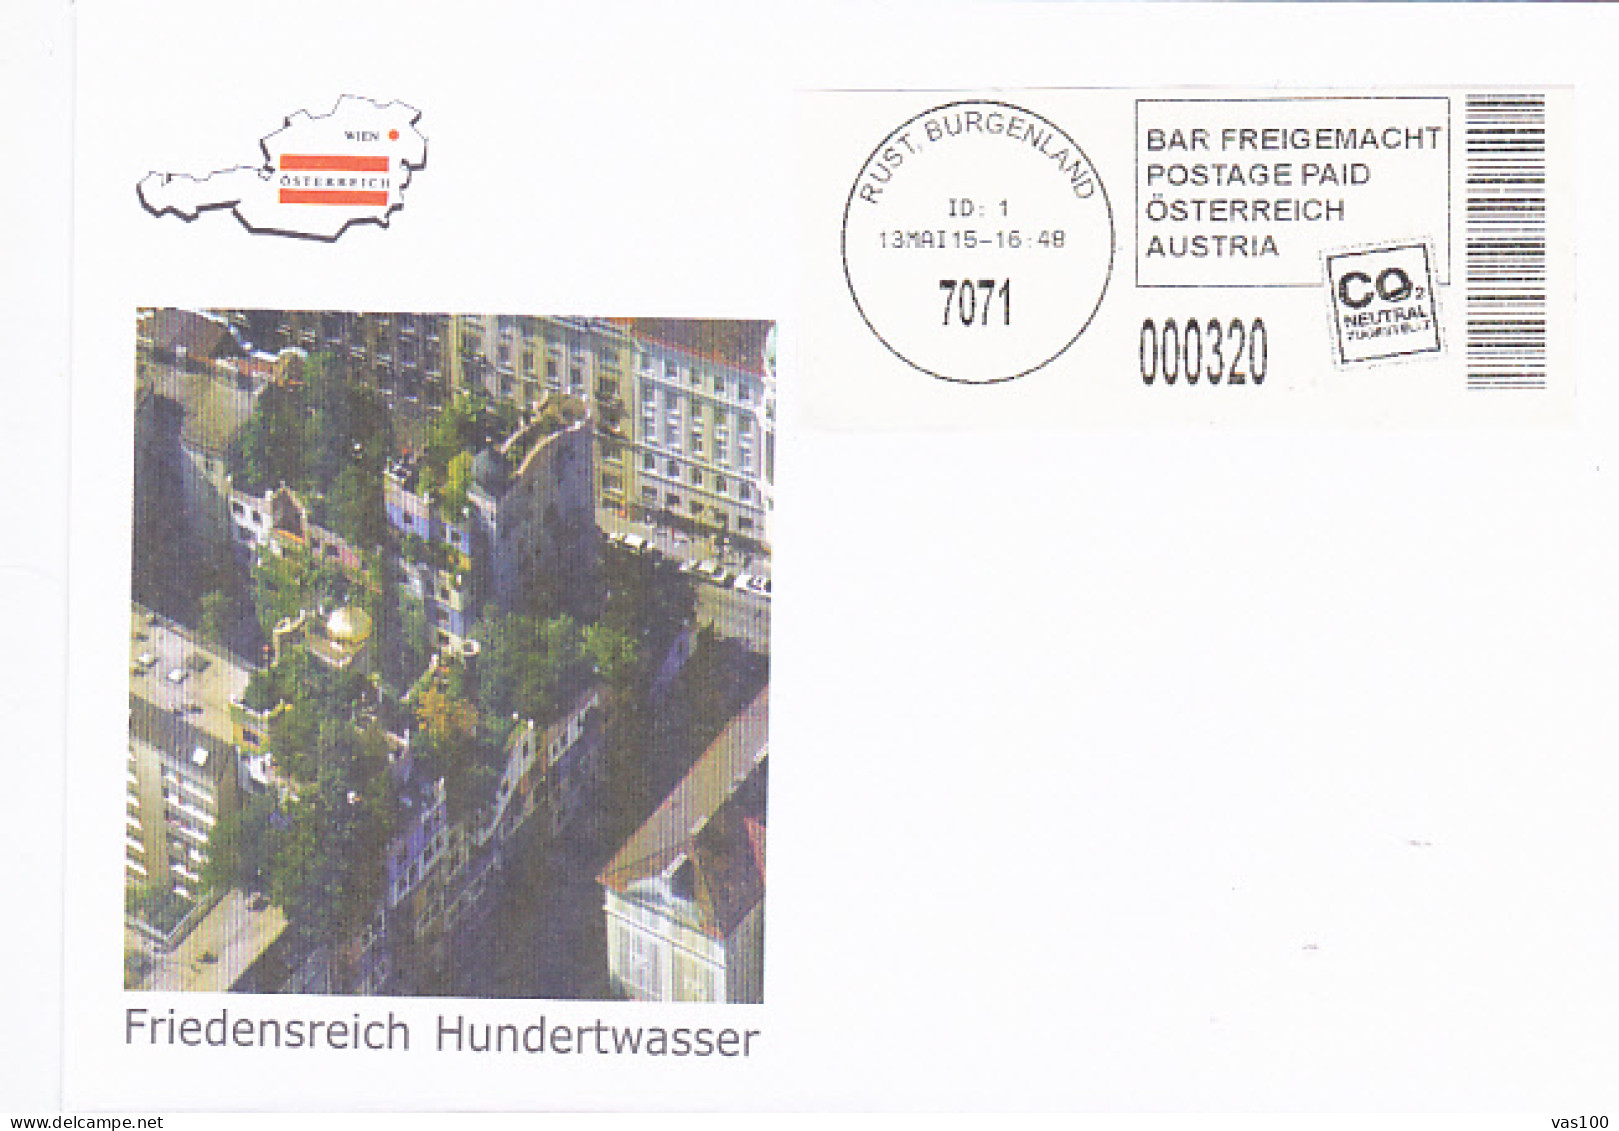 FRIEDENSREICH HUNDERTWASSER, ARCHITECT, POSTAGE PAID SPECIAL COVER, 2015, AUSTRIA - Lettres & Documents